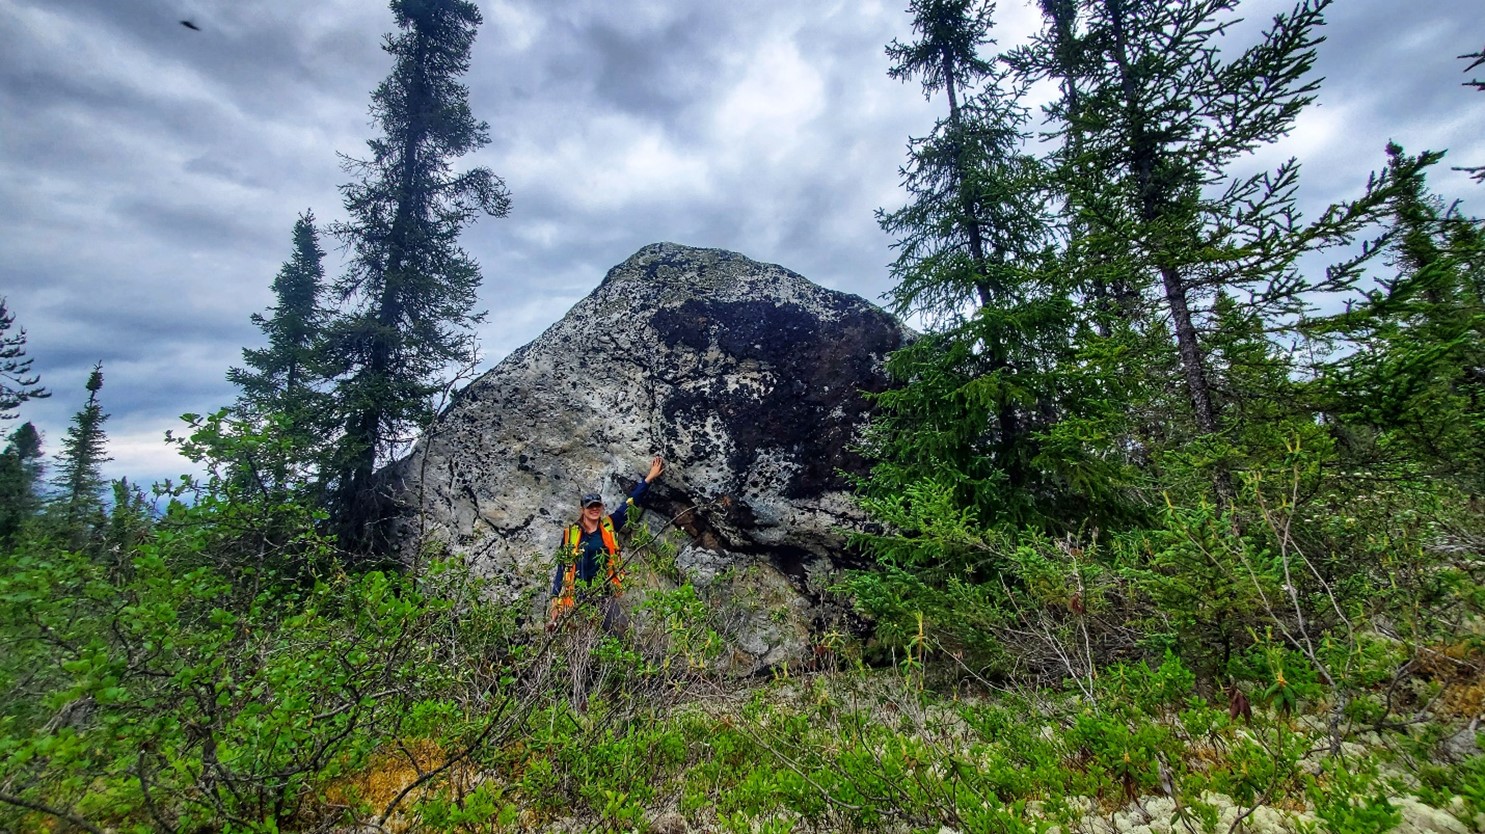 New angular boulder discovered in latest prospecting program